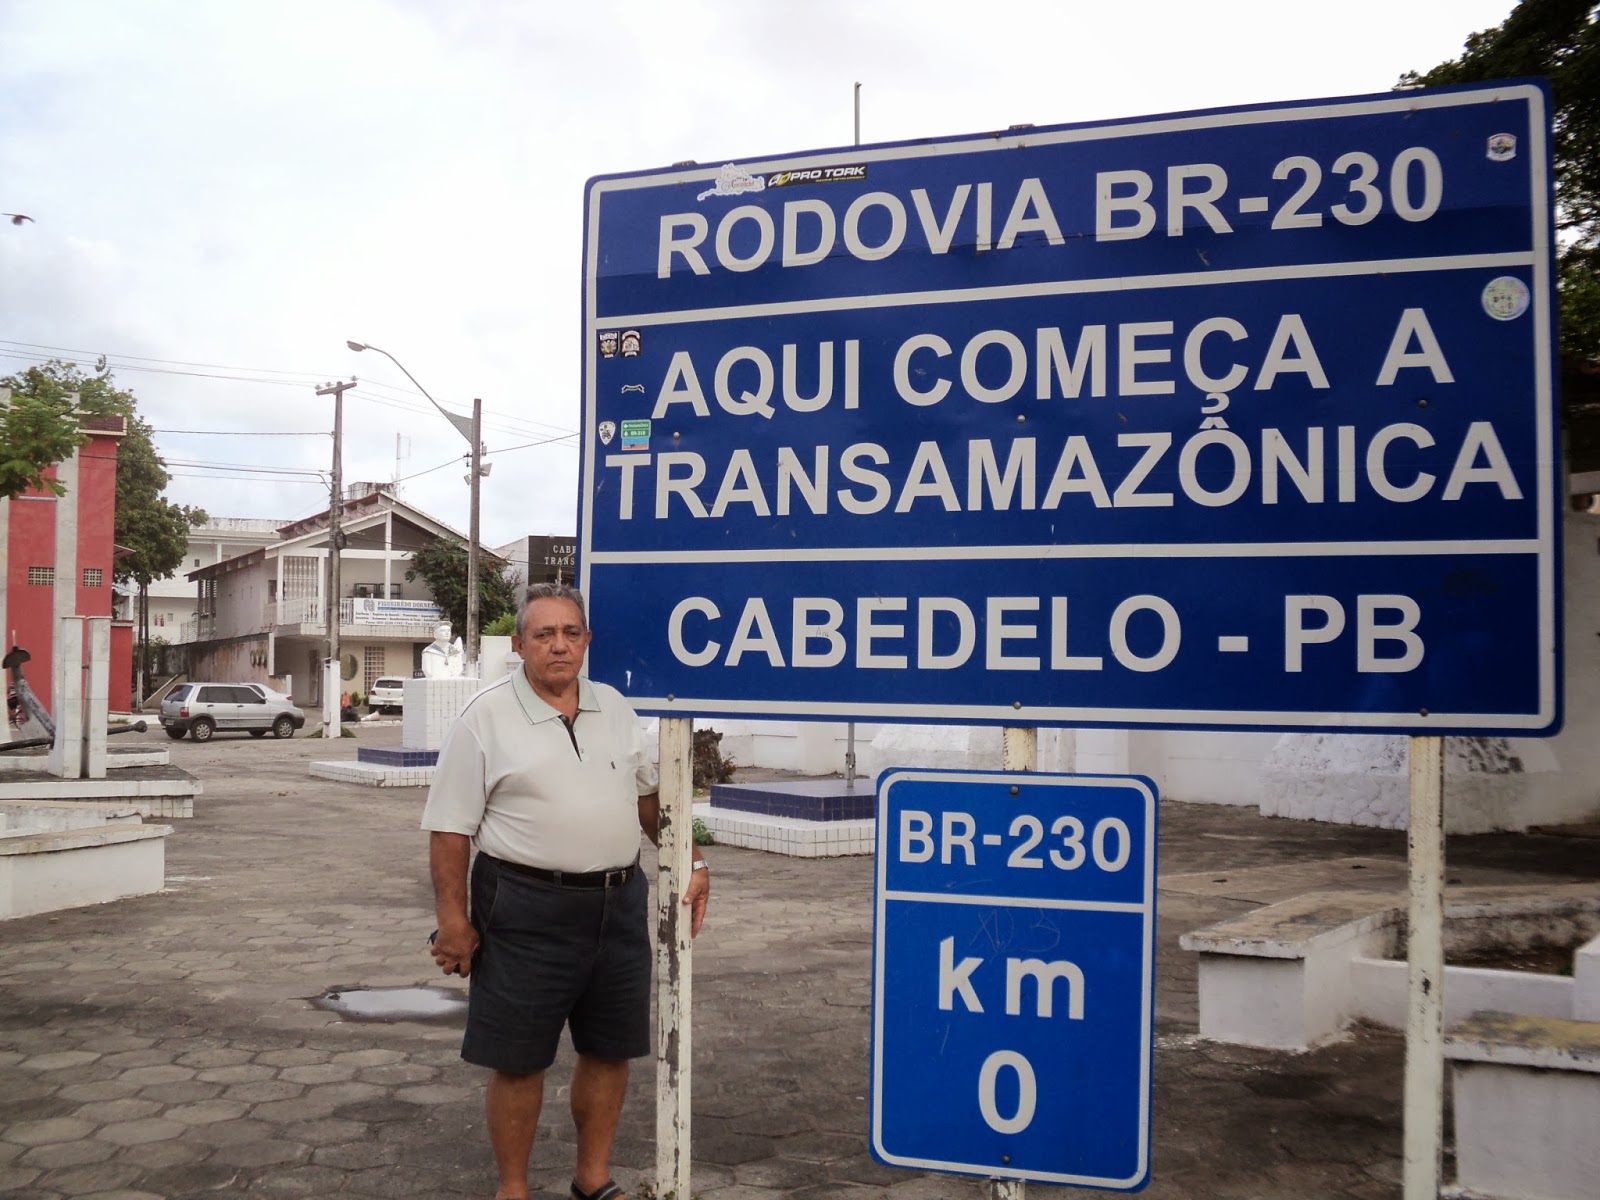 Inicio da BR 230 Transamazônica - Cabedelo/PB - Ep 04 - Br 319, Br 230,  Uiramutã 